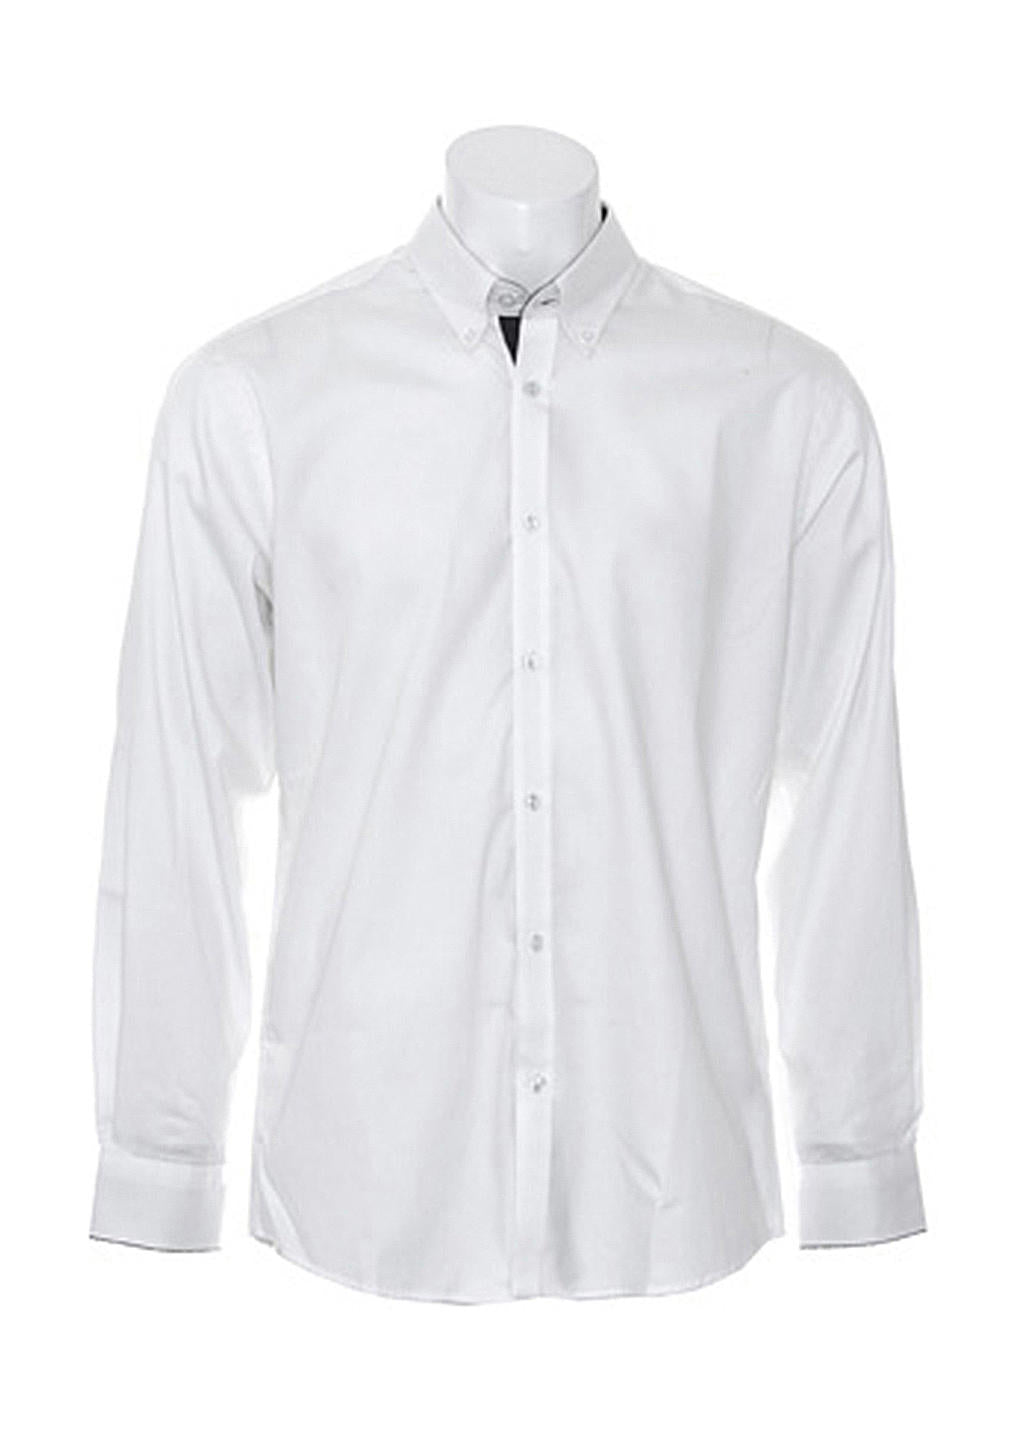 Kustom Kit Contrast Premium Oxford Herren Button Down Langarm Hemd